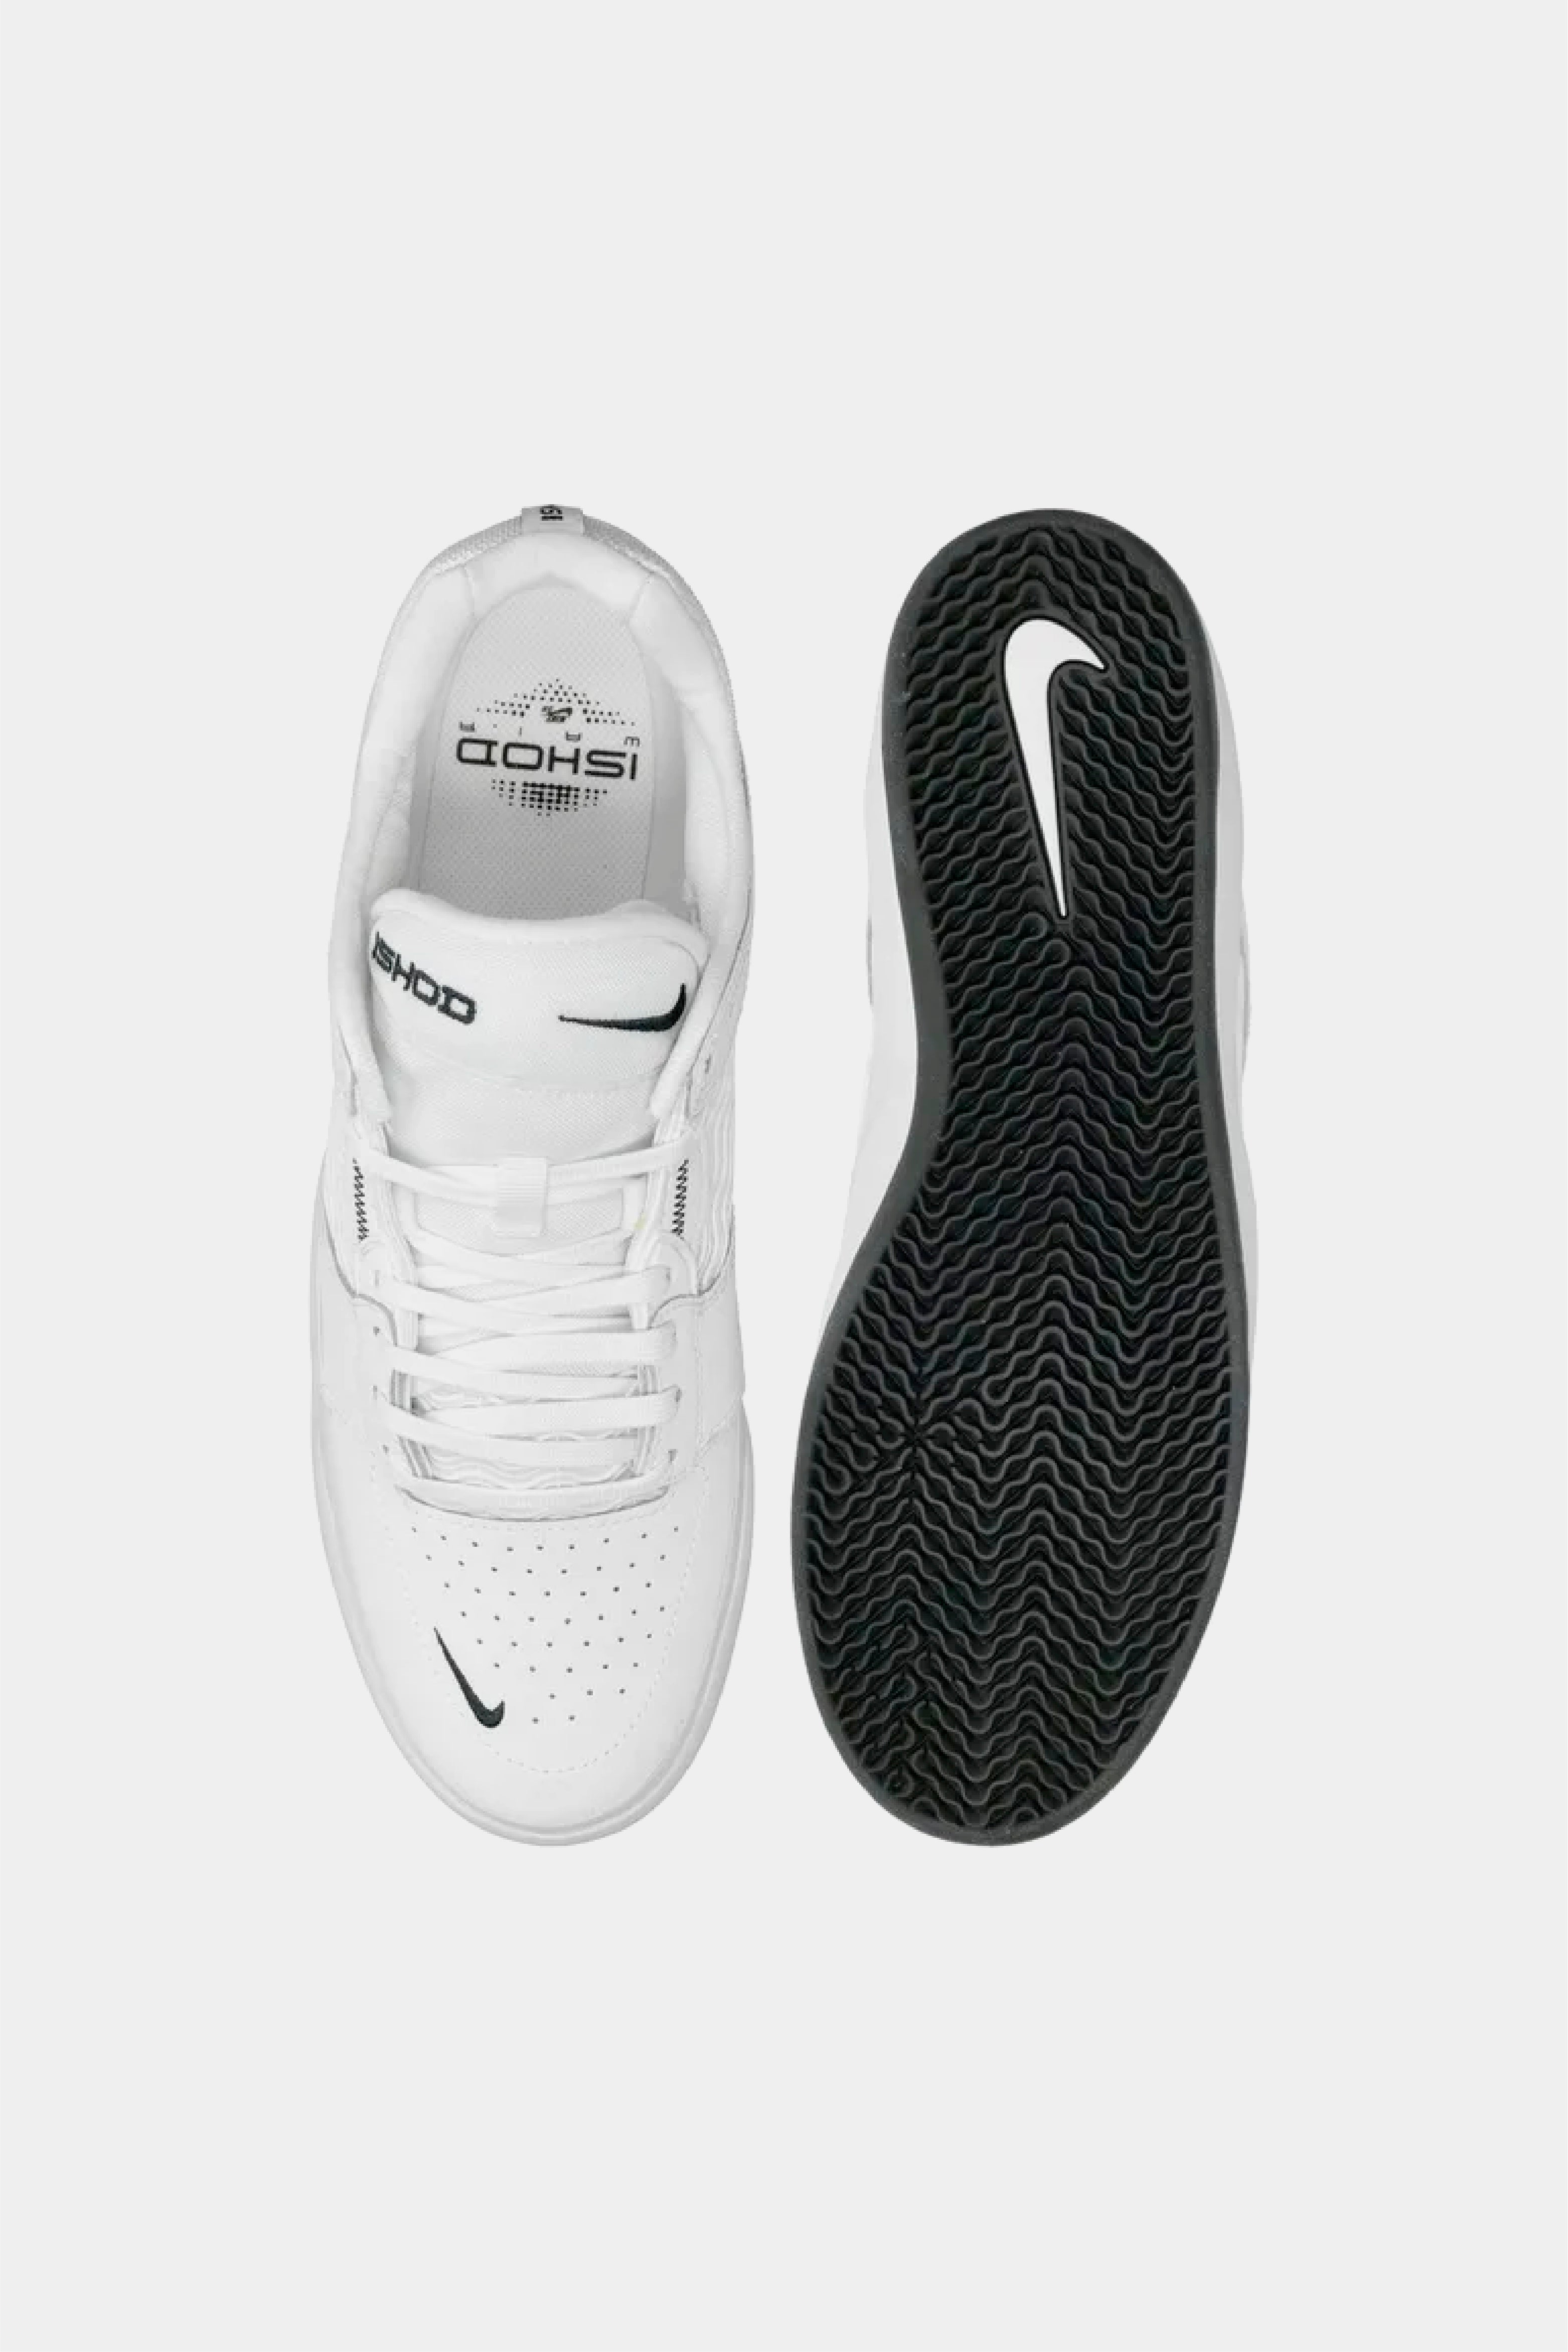 Selectshop FRAME - NIKE SB Nike SB ISHOD PRM Footwear Dubai